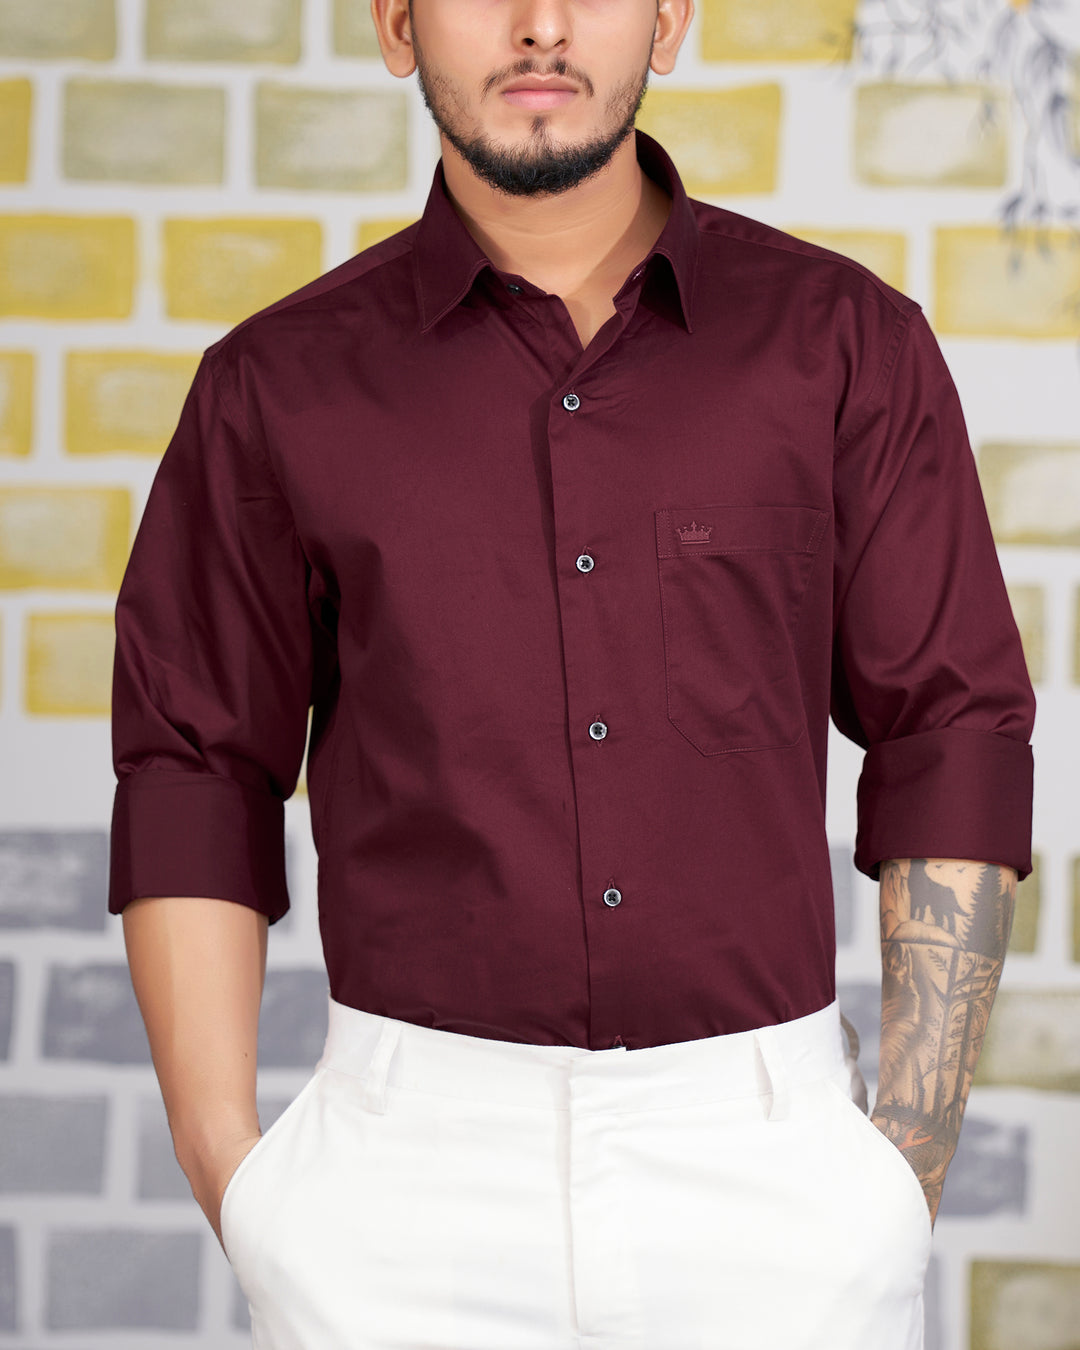 11 Stylish Men's Shirt Colours for Dark Skin Tones